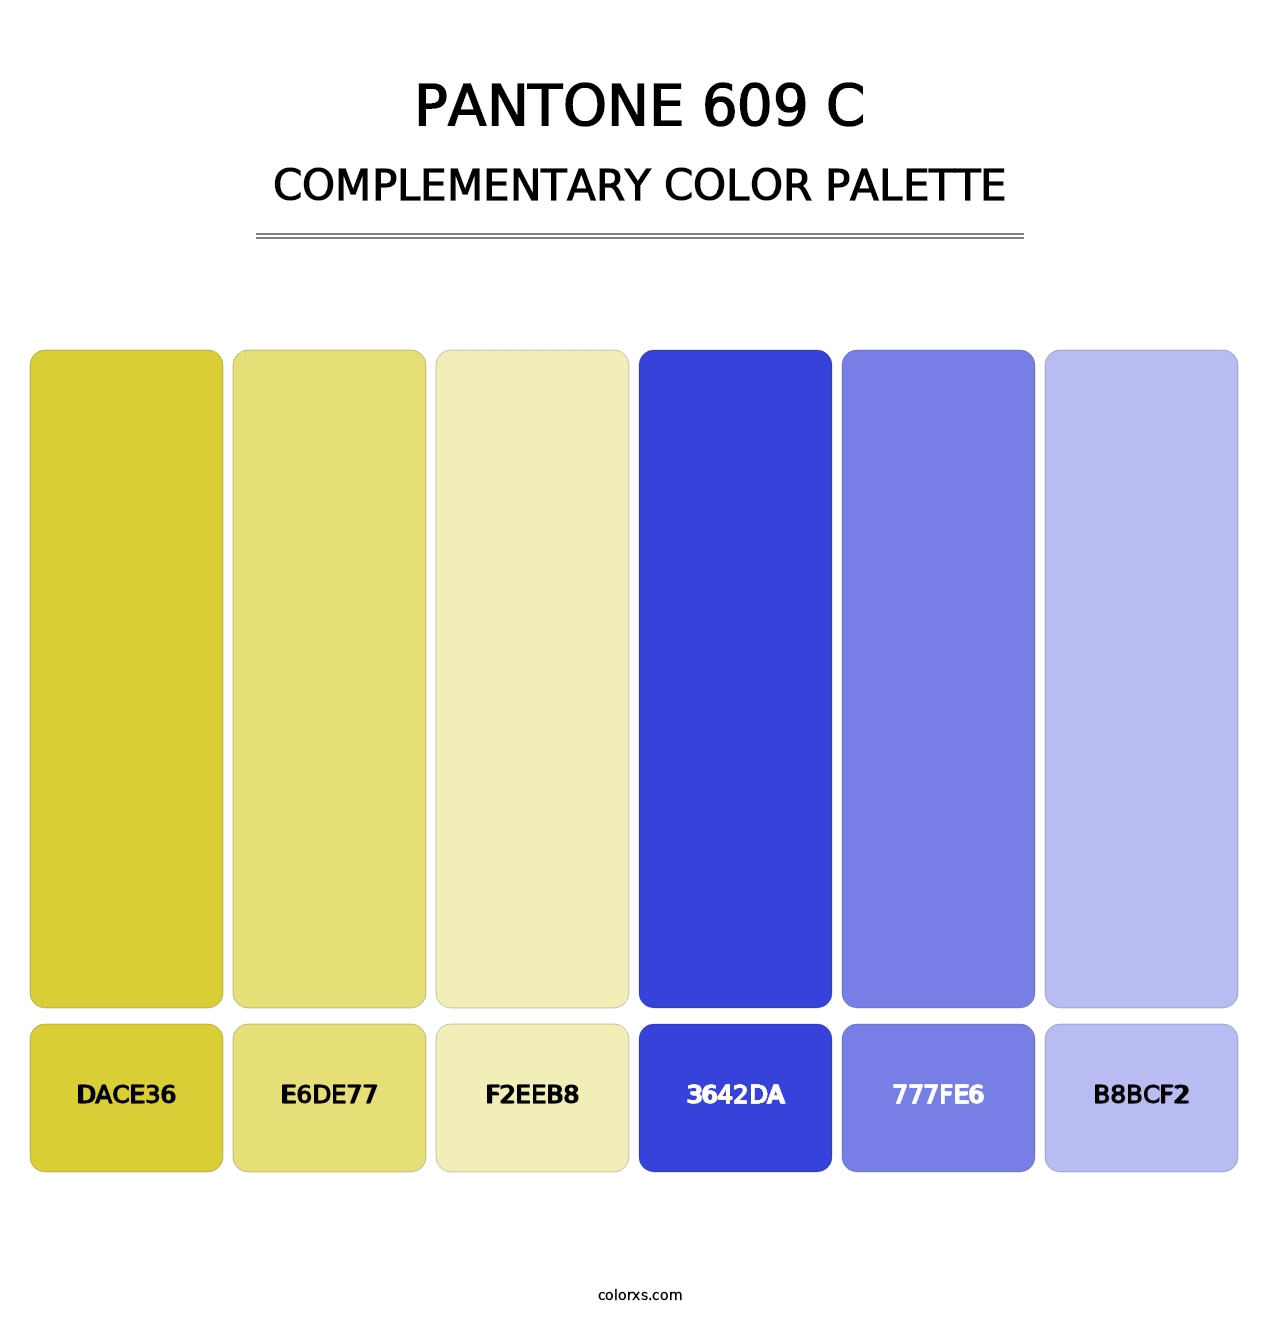 PANTONE 609 C - Complementary Color Palette